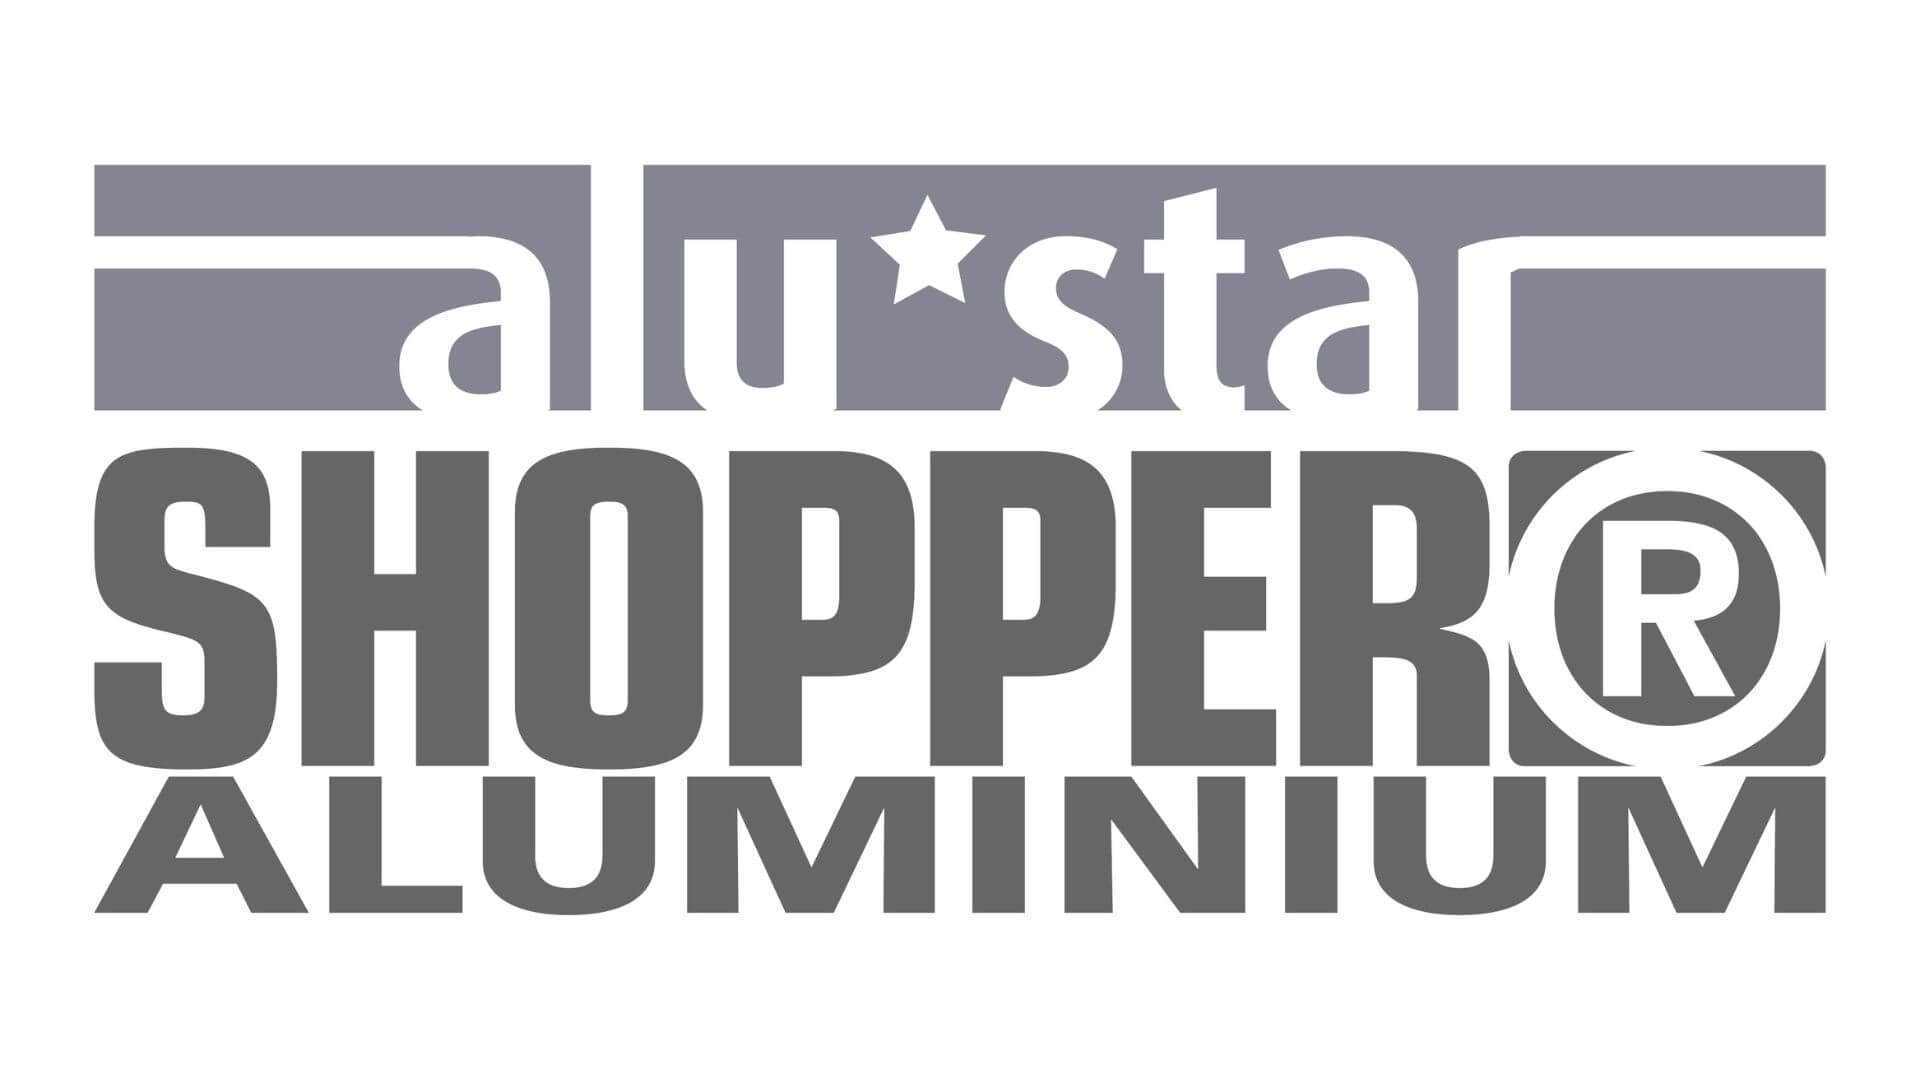 Load video: Film über den Andersen Alu Star Shopper